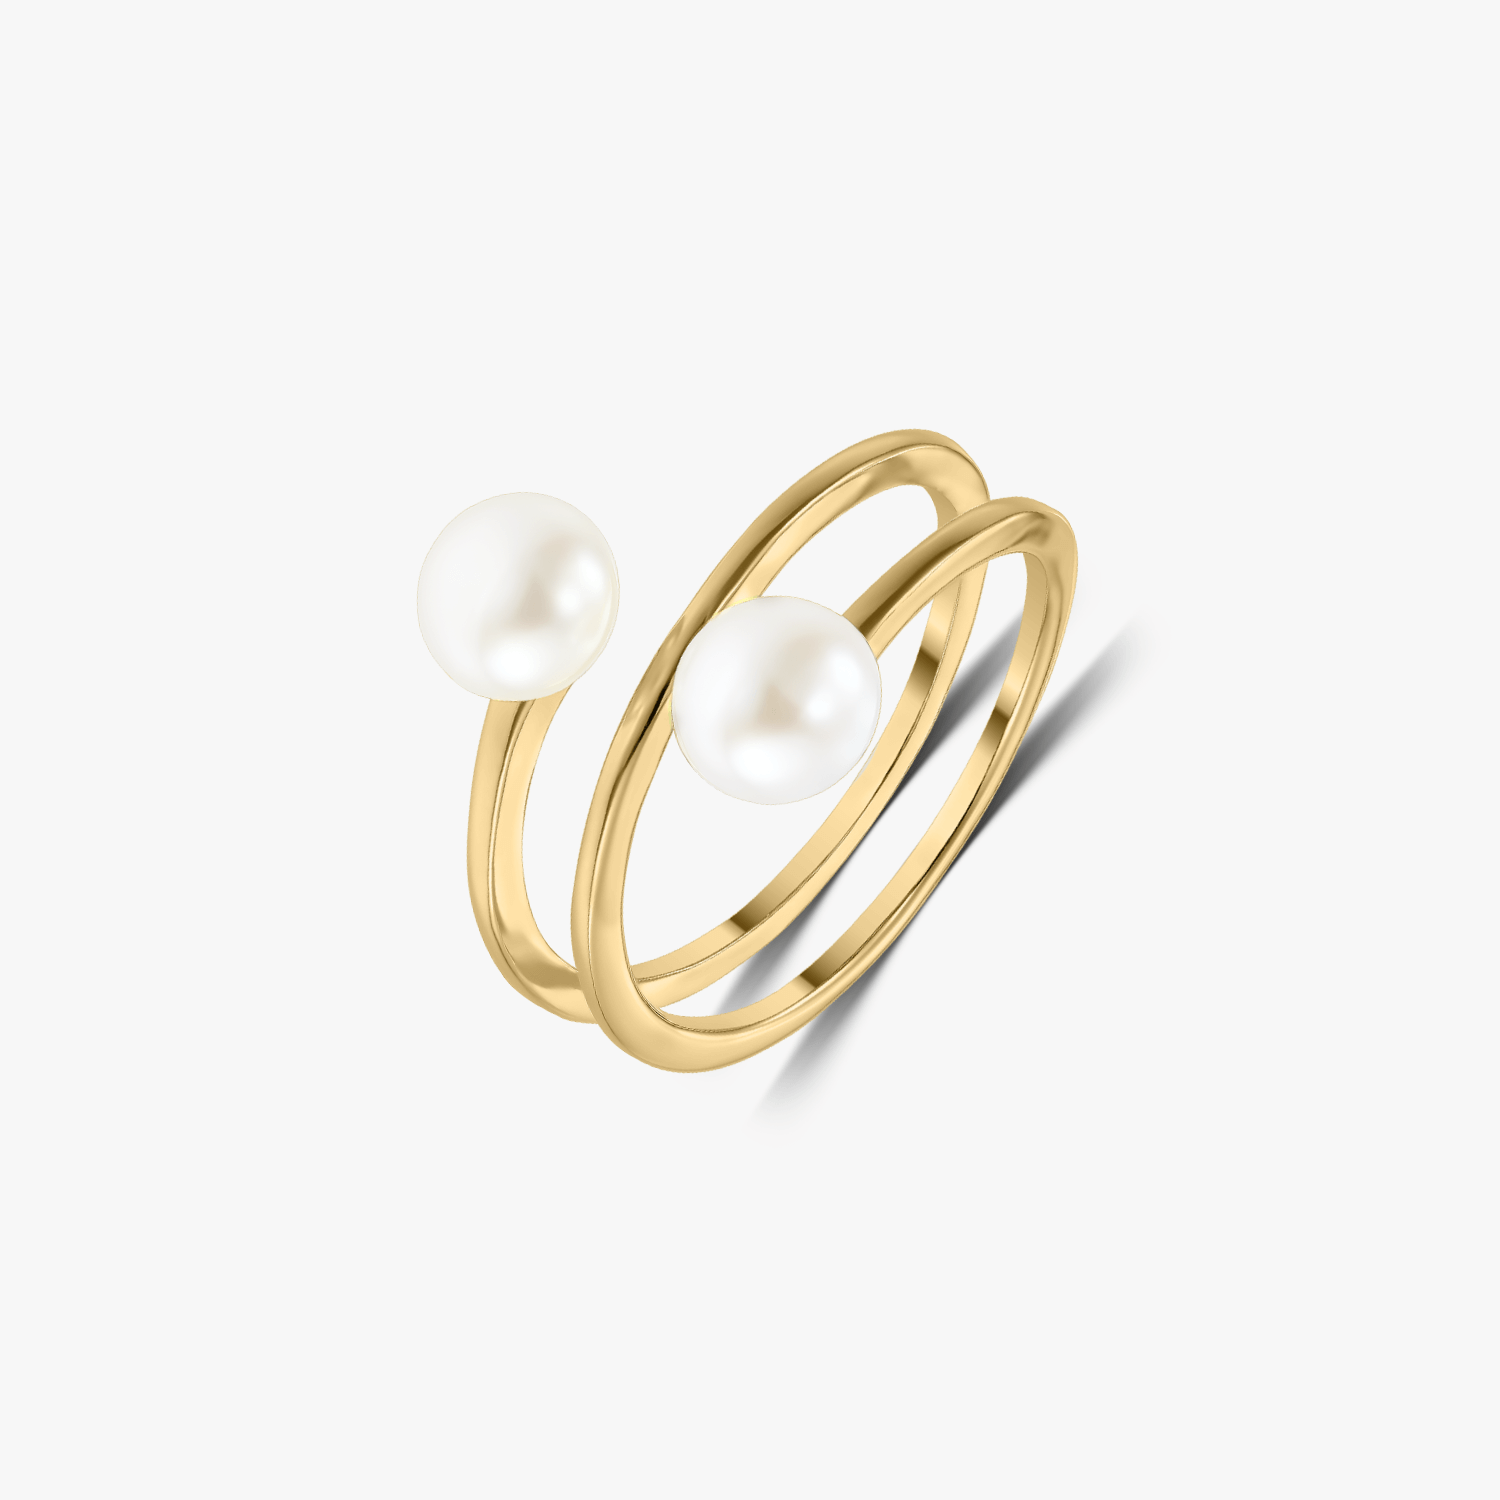 Golden Genesis silver ring - Natural pearls